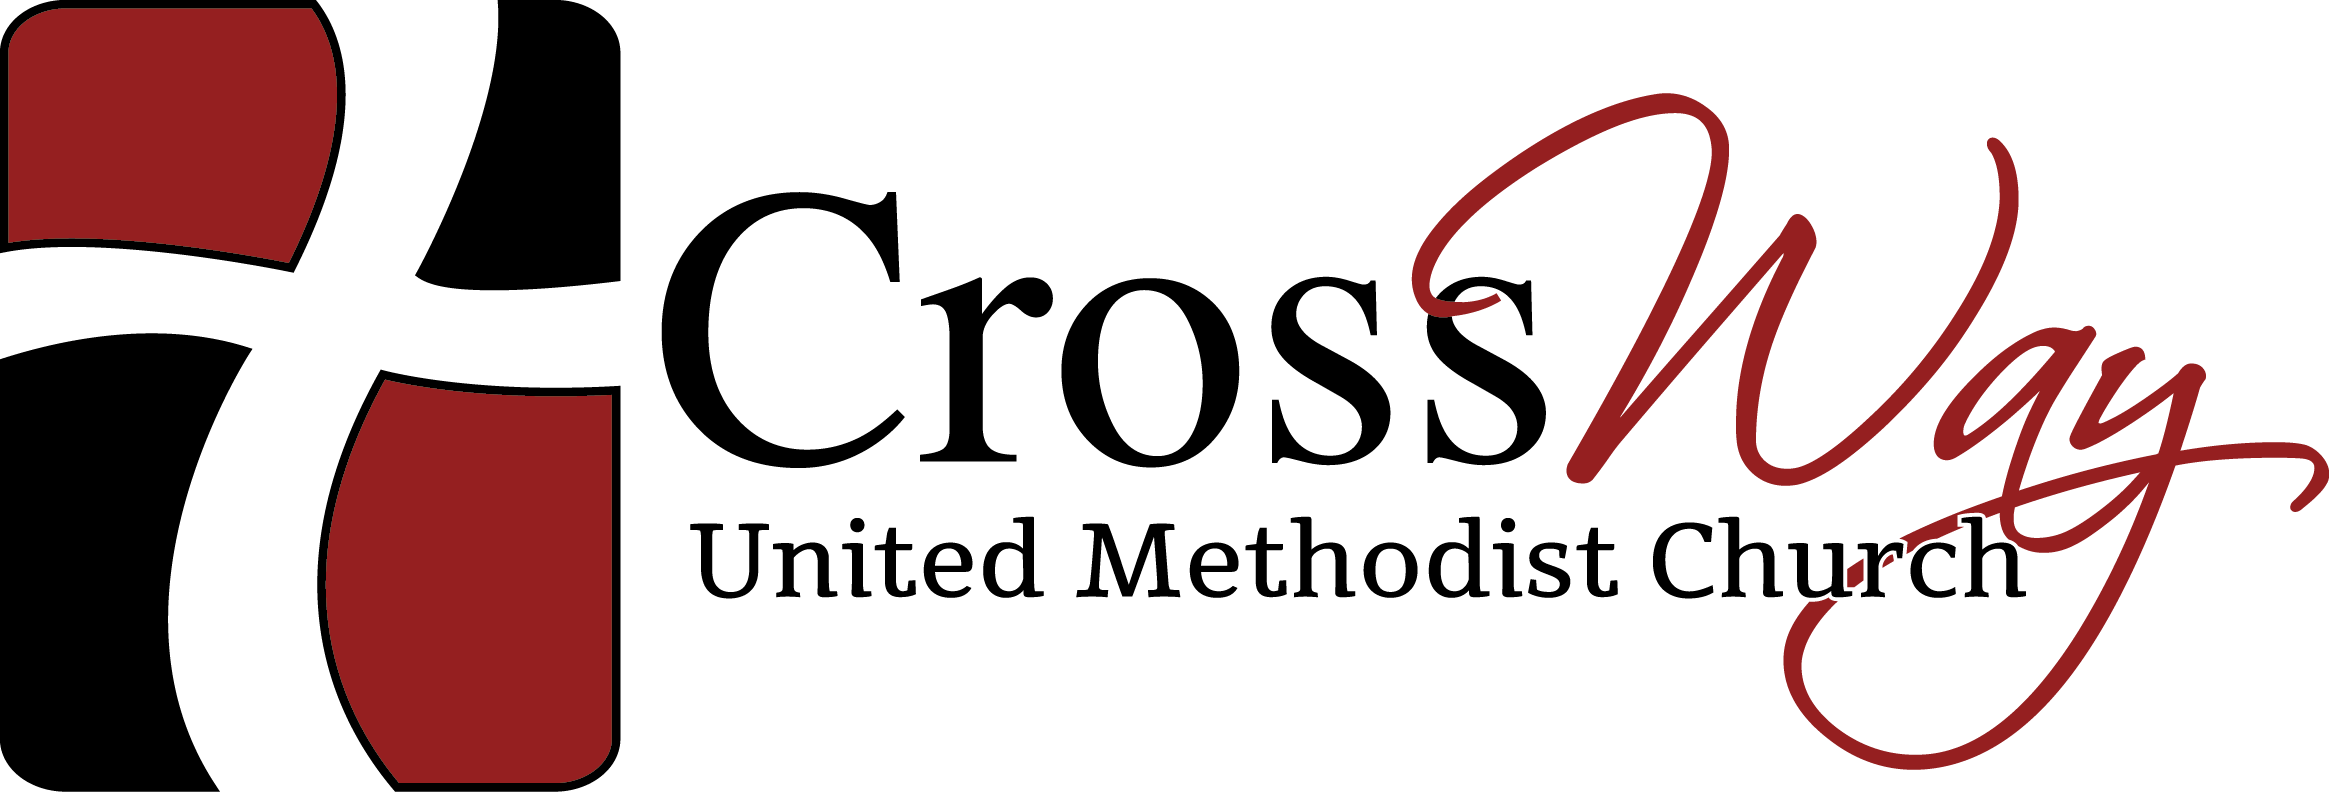 Crossway Logo - Cross Way UMC Methodist Church, 380 Corridor